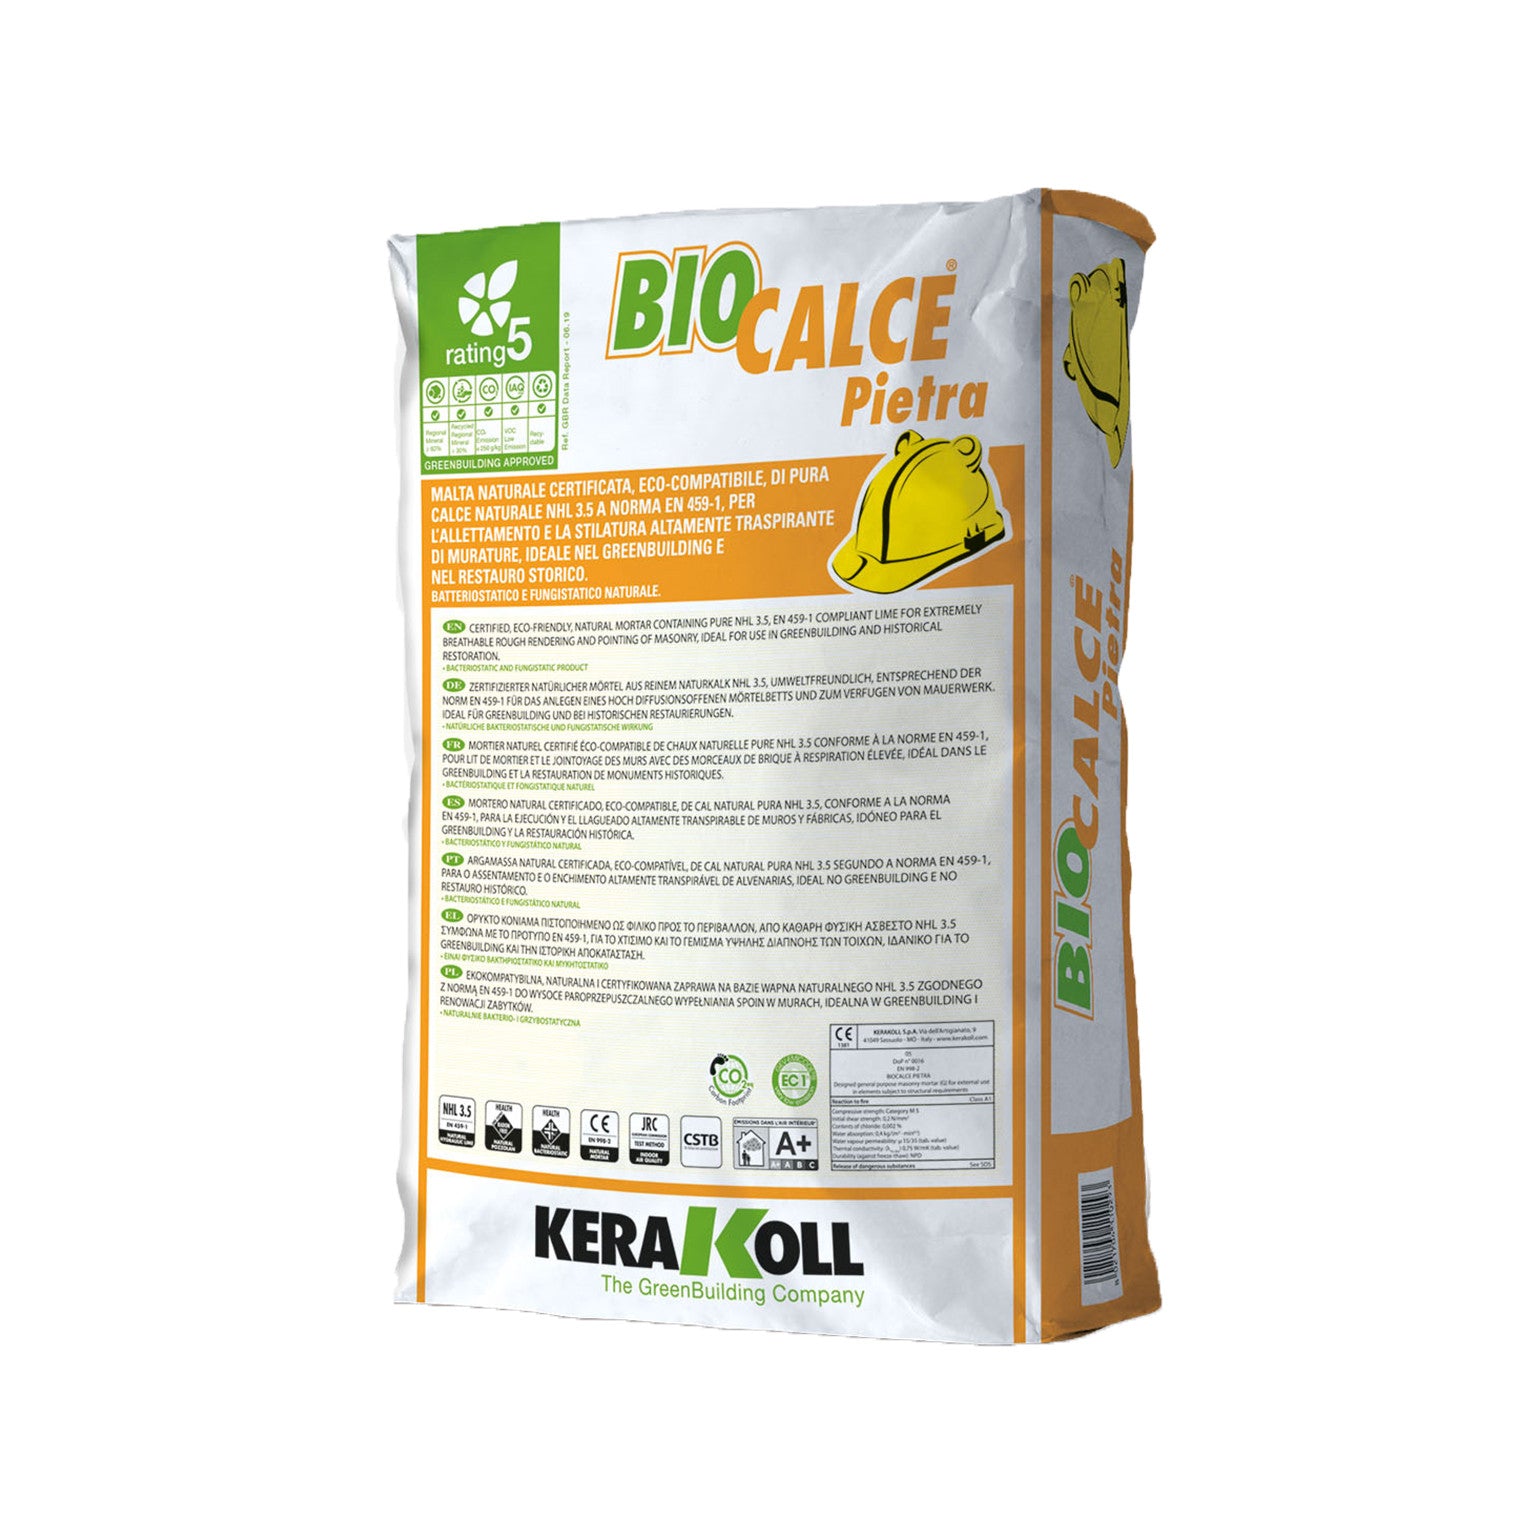 Biocalce Pietra-Malta Naturale Certificata In Pura Calce Nhl 3,5 Ideale Per Allettamento Murature Traspiranti 25 Kg -Kerakoll